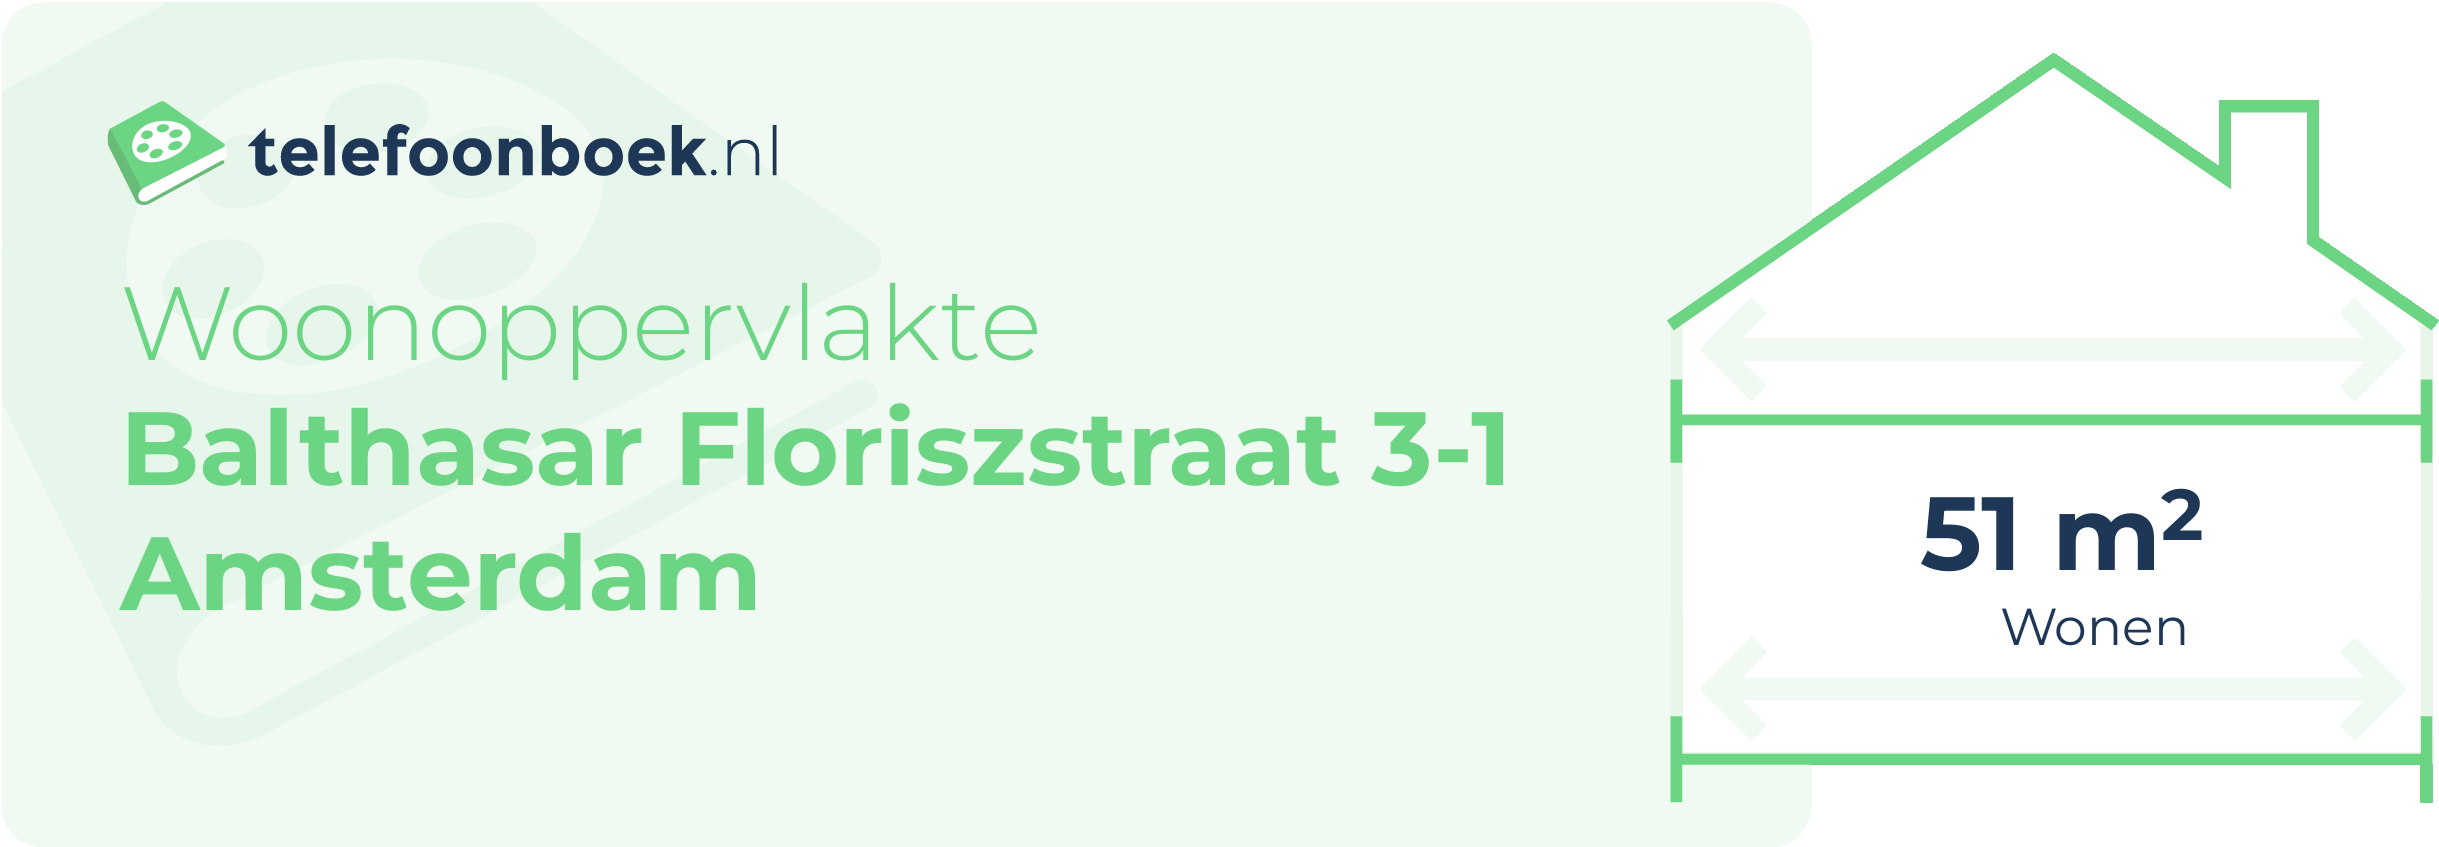 Woonoppervlakte Balthasar Floriszstraat 3-1 Amsterdam